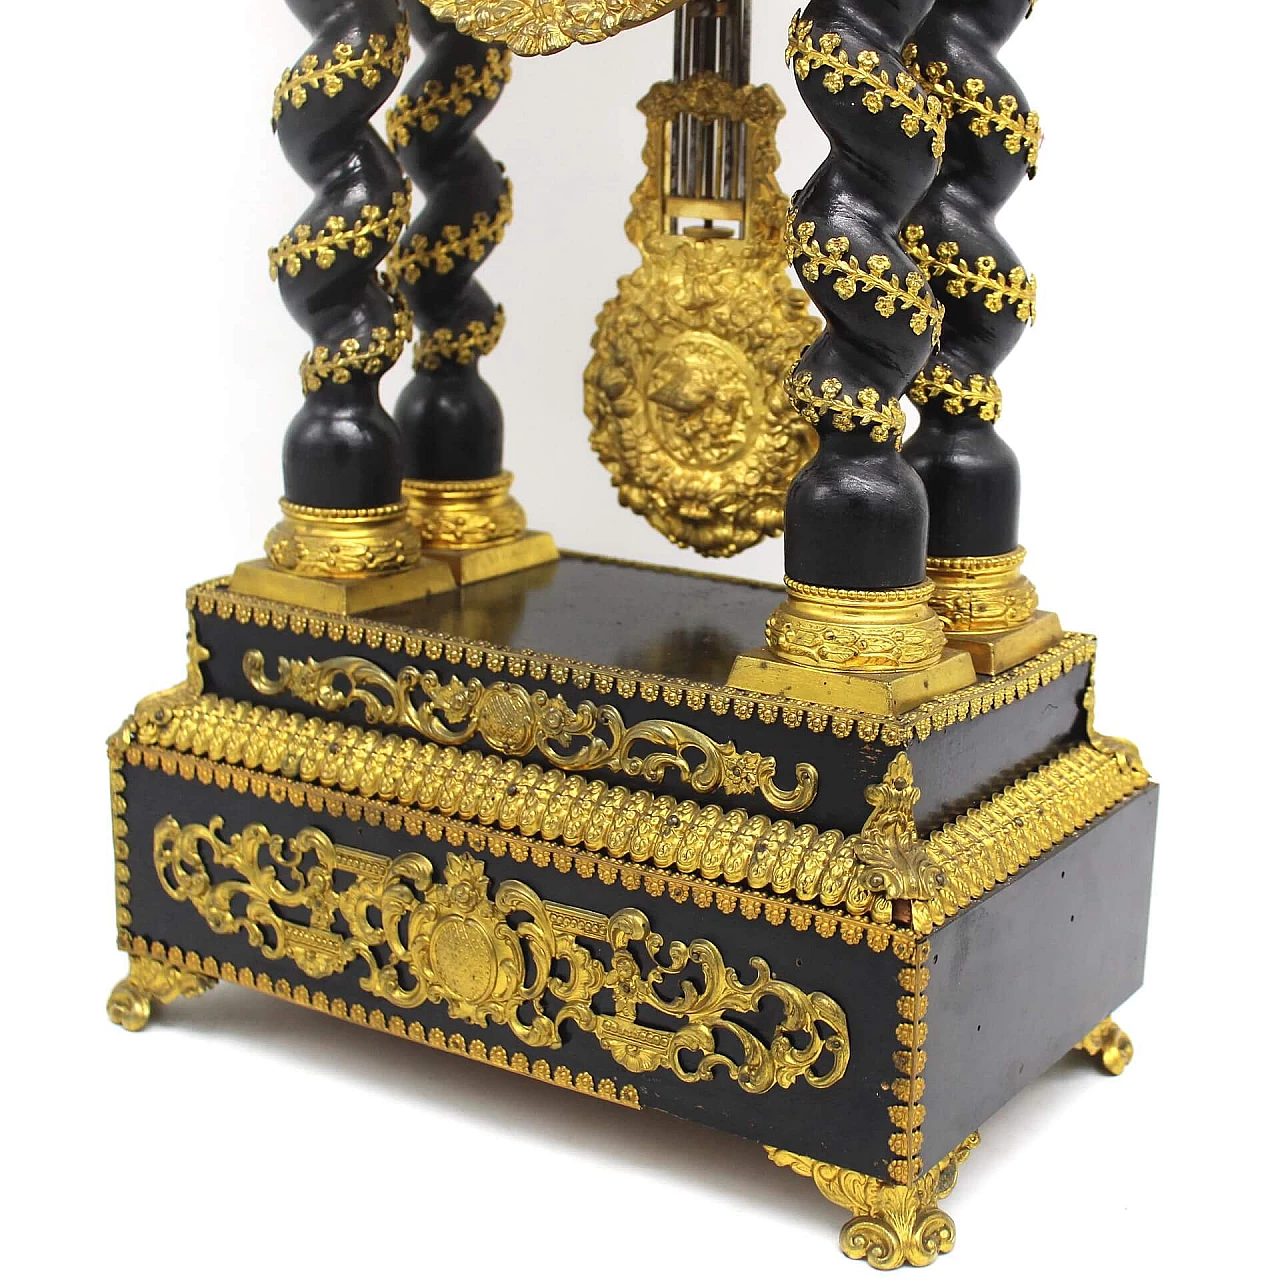 Napoleon III pendulum clock in ebonized wood and gilded bronzes, 19th century. 1336763